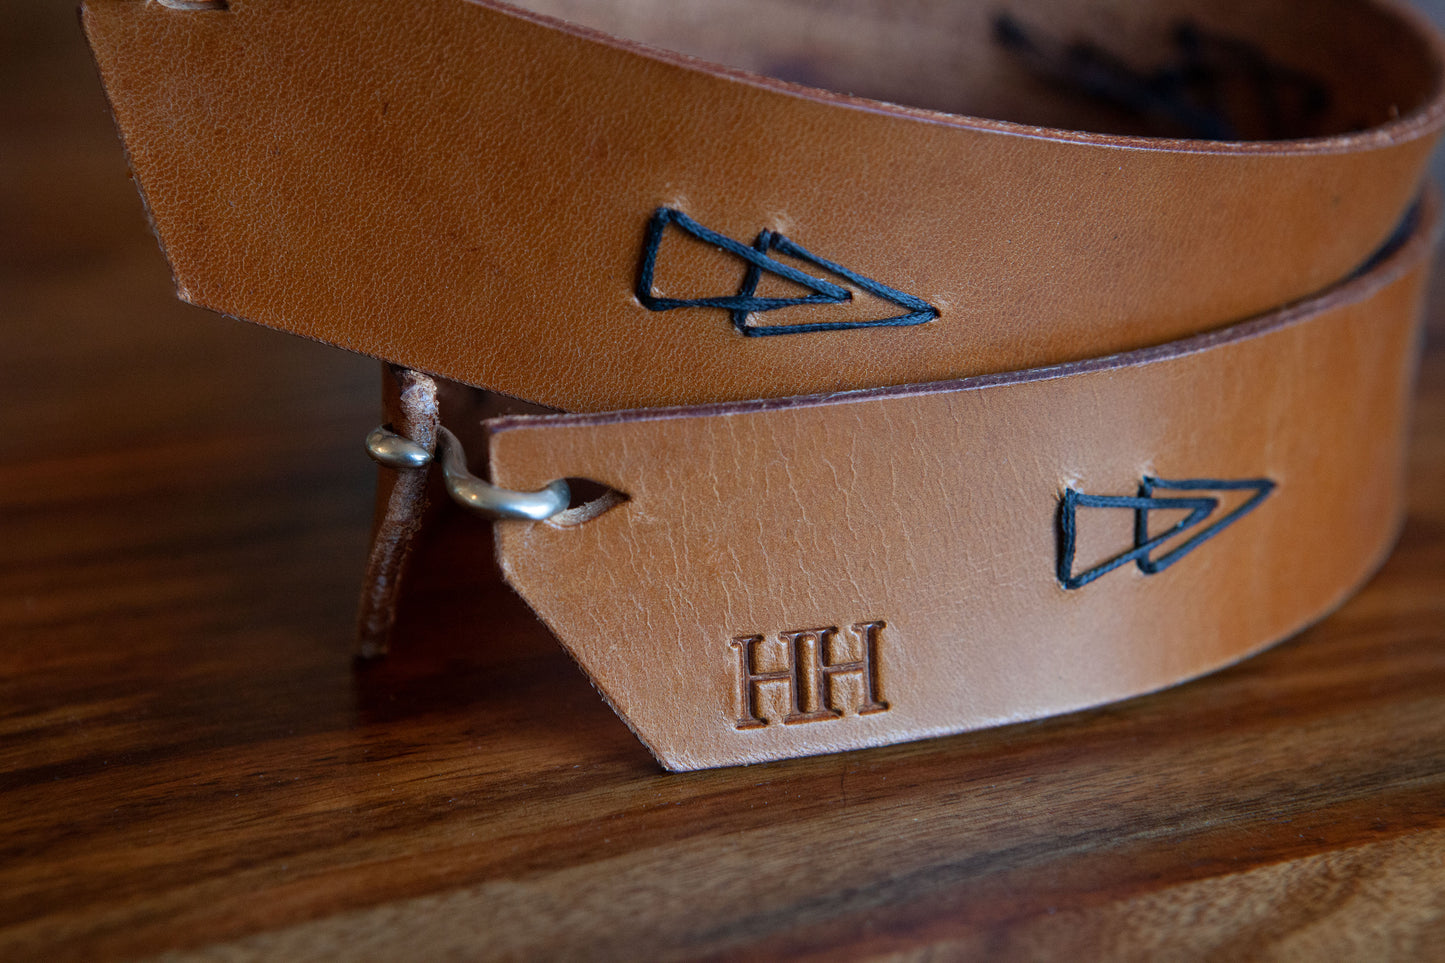 Arrowhead - Handmade Premium Leather Boot Cuffs by Hoof & Heel